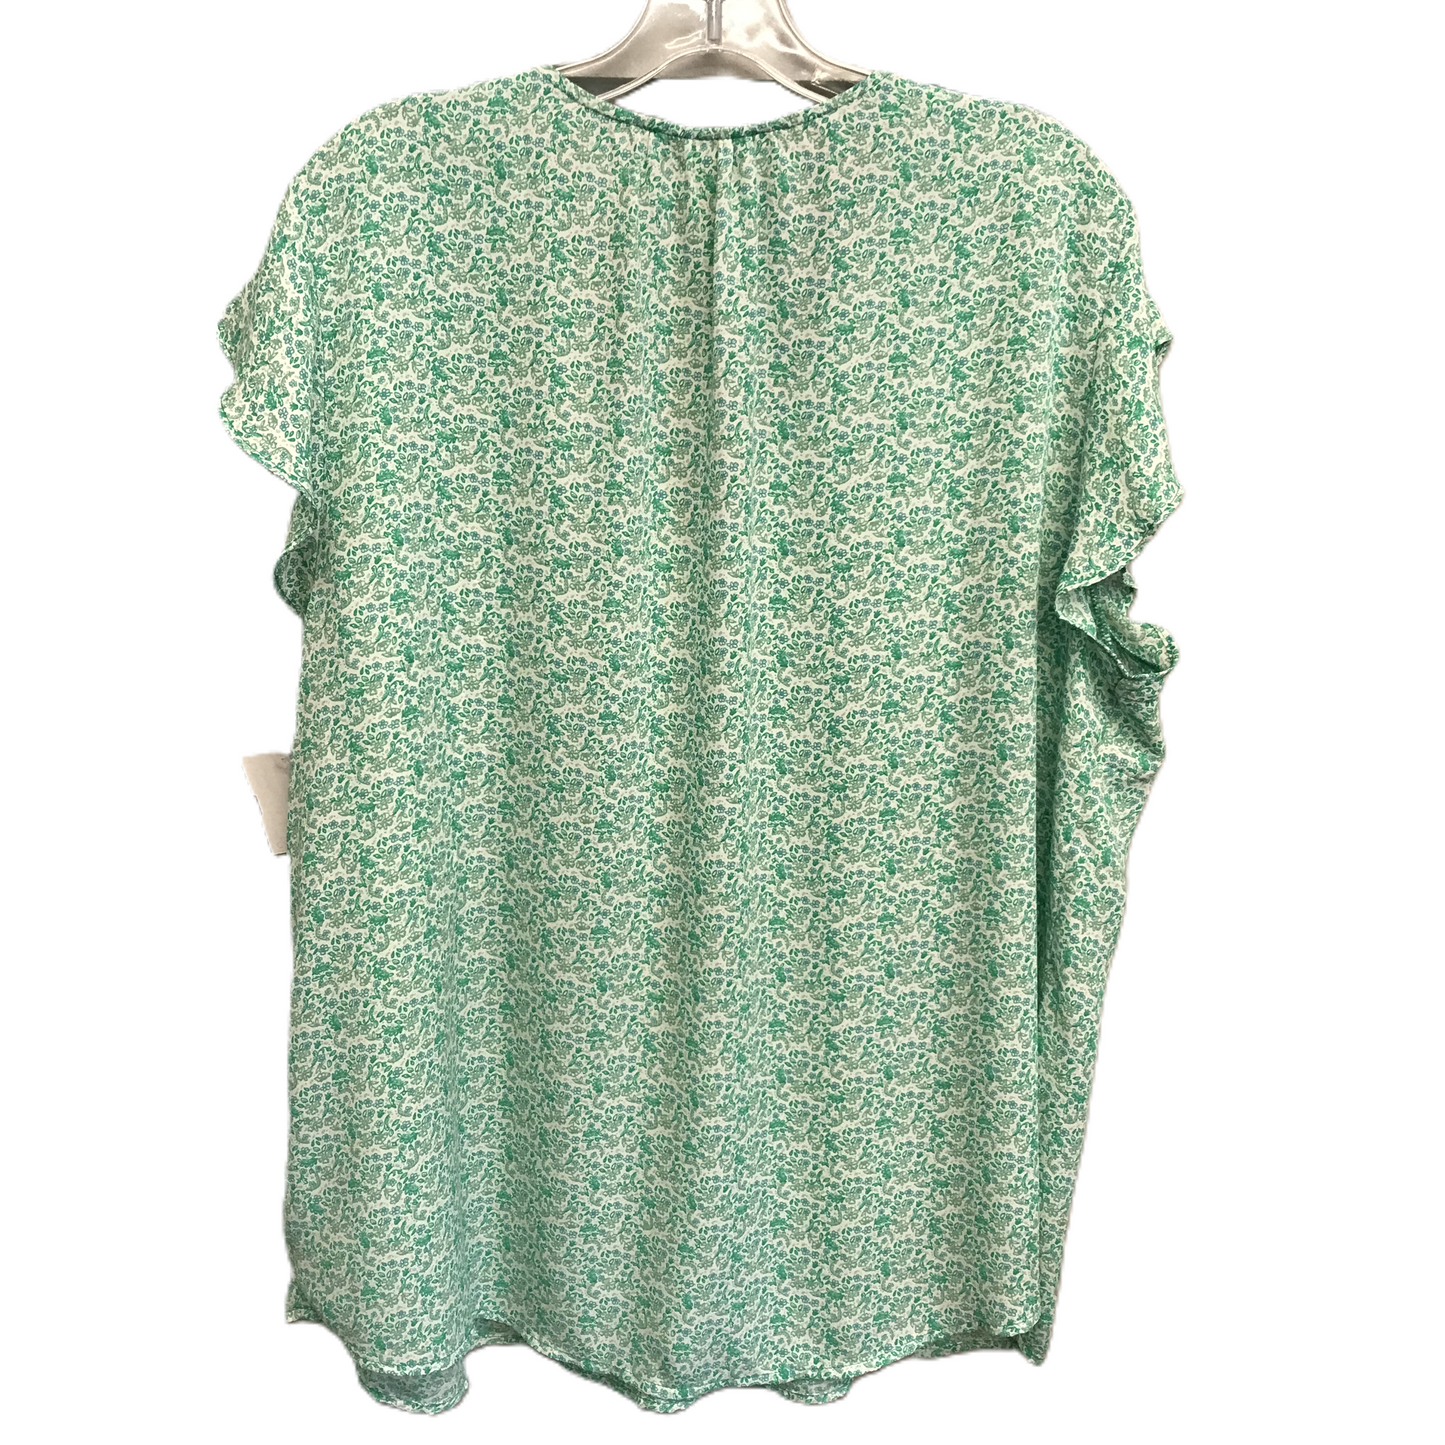 Green Top Sleeveless By Cynthia Rowley, Size: 1x